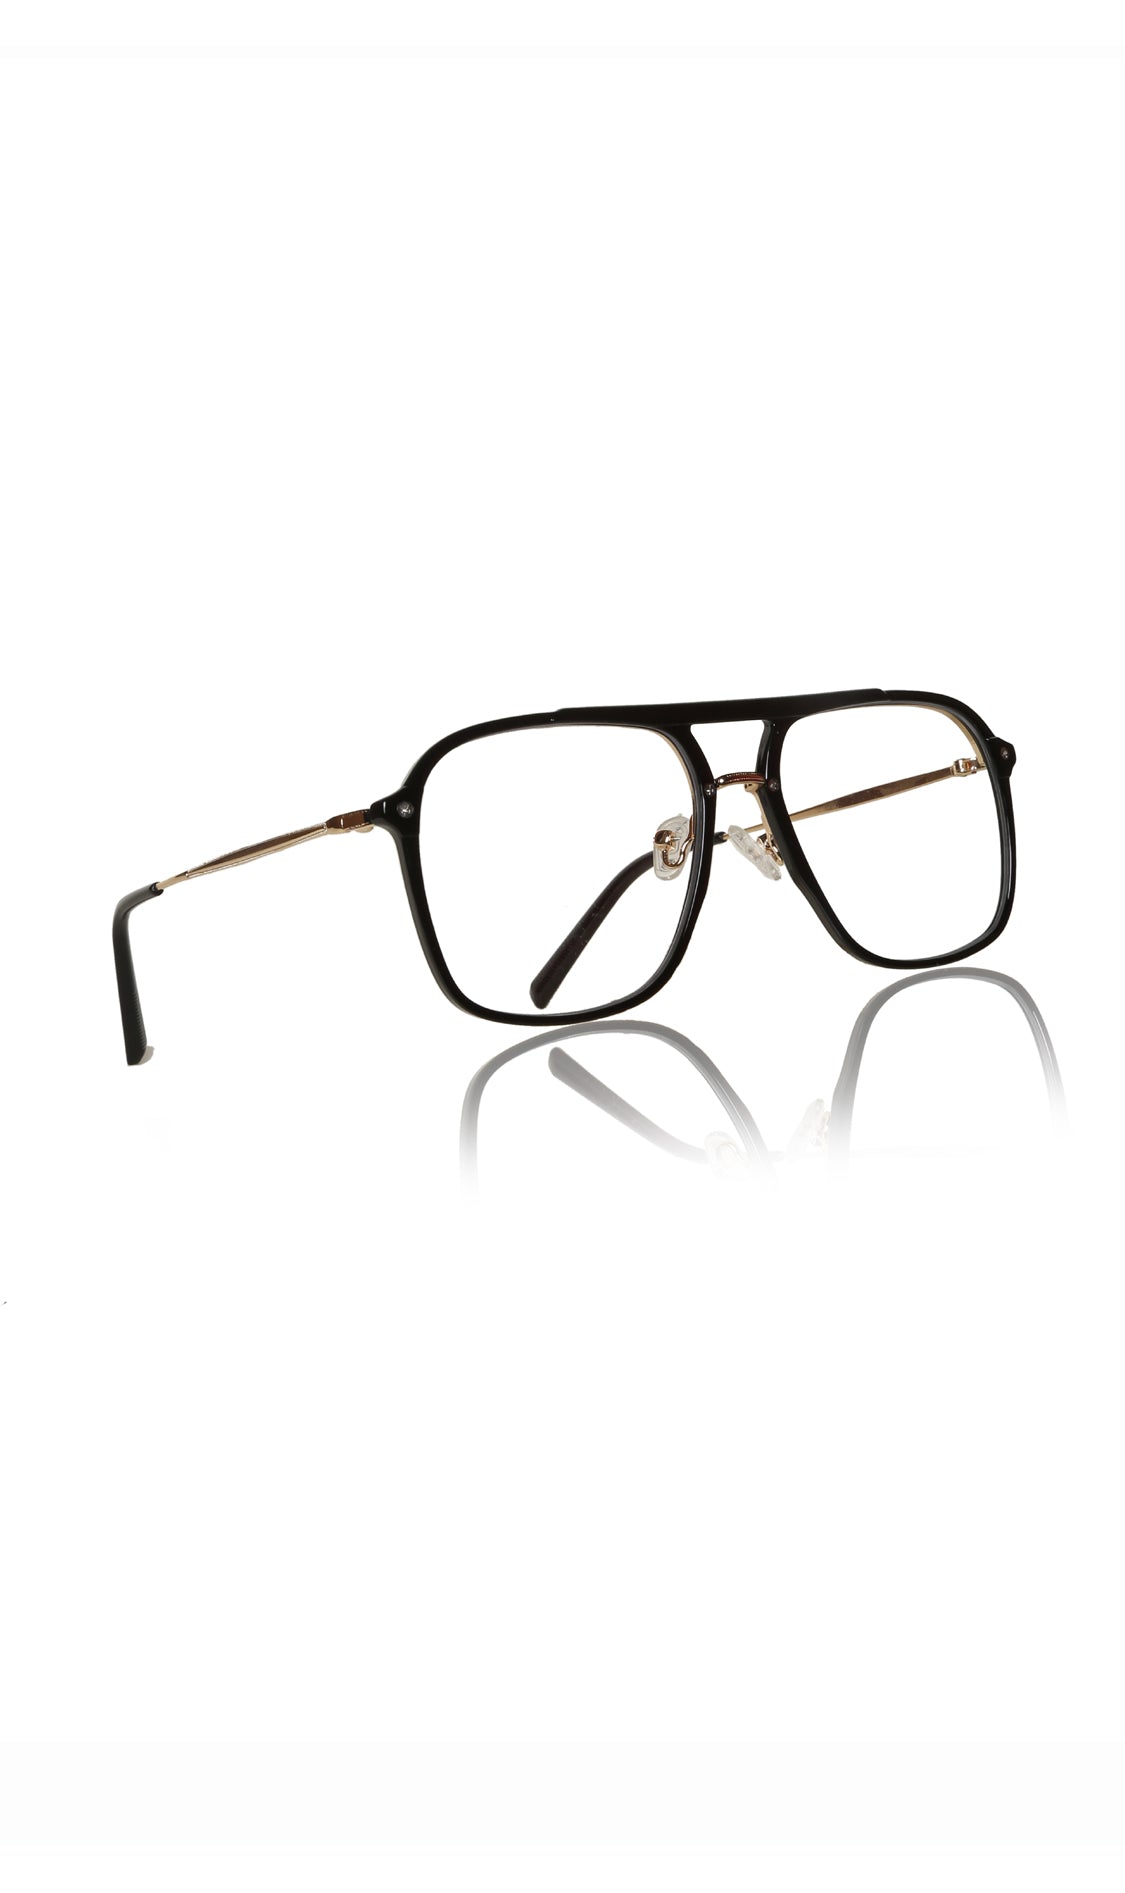 Jodykoes® Premium Series Double Bar Eyewear Eyeglasses Spectacles Frame for Men and Women (Black and Gold)